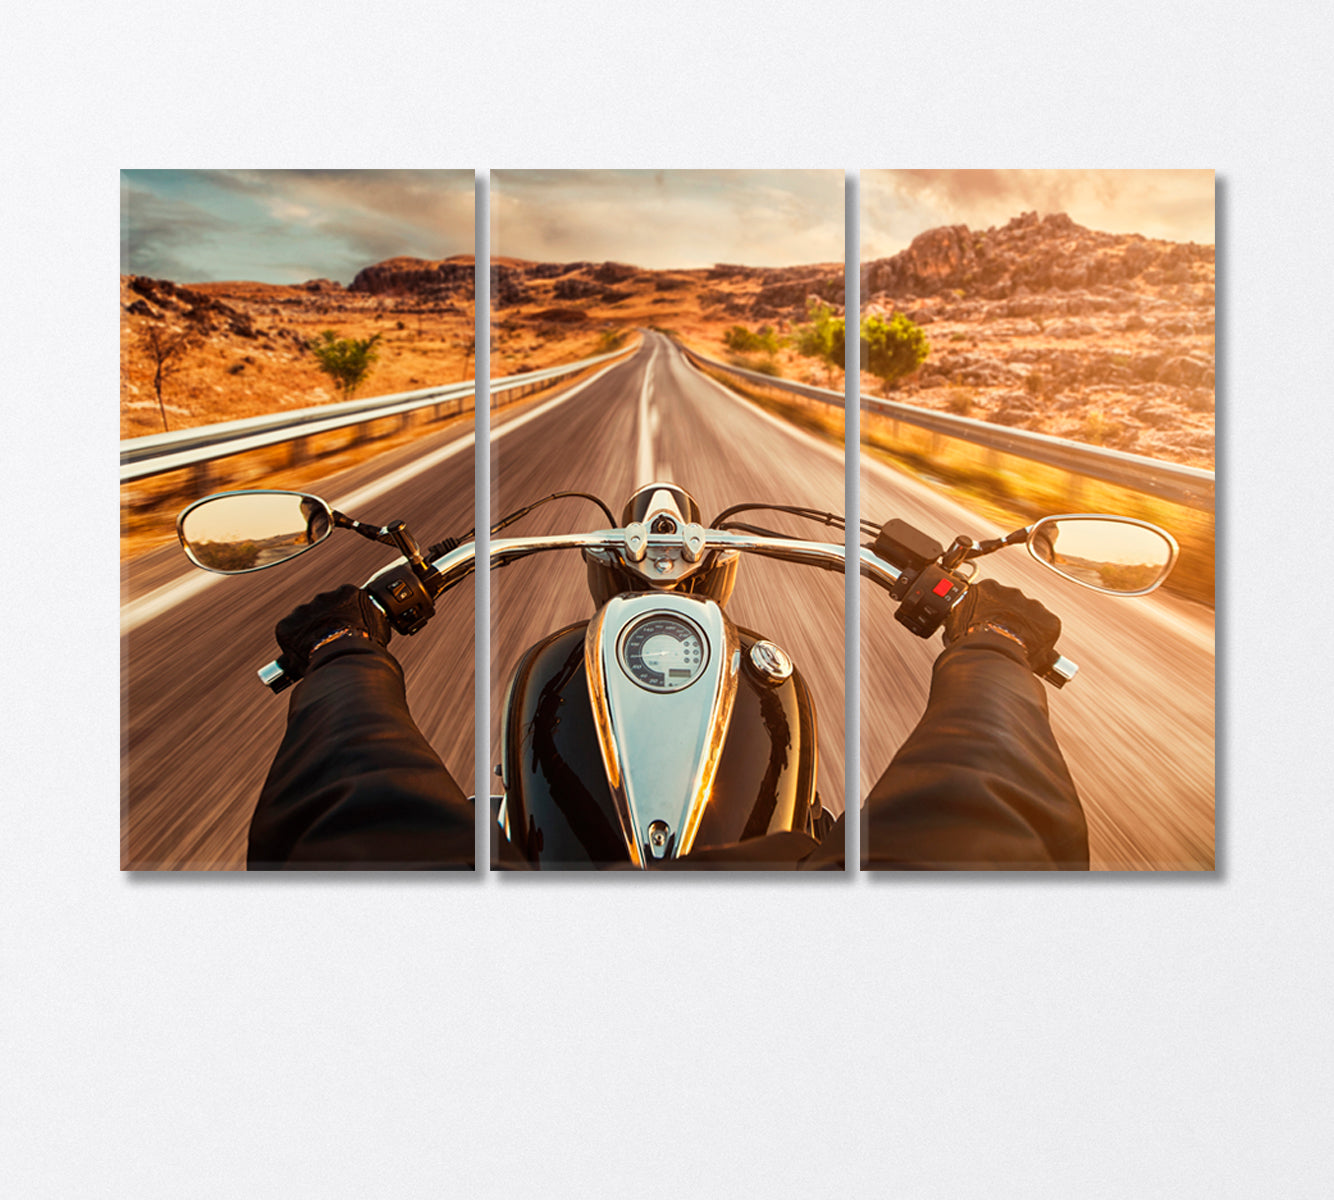 Motorcycle Driver on Empty Road Canvas Print-Canvas Print-CetArt-3 Panels-36x24 inches-CetArt